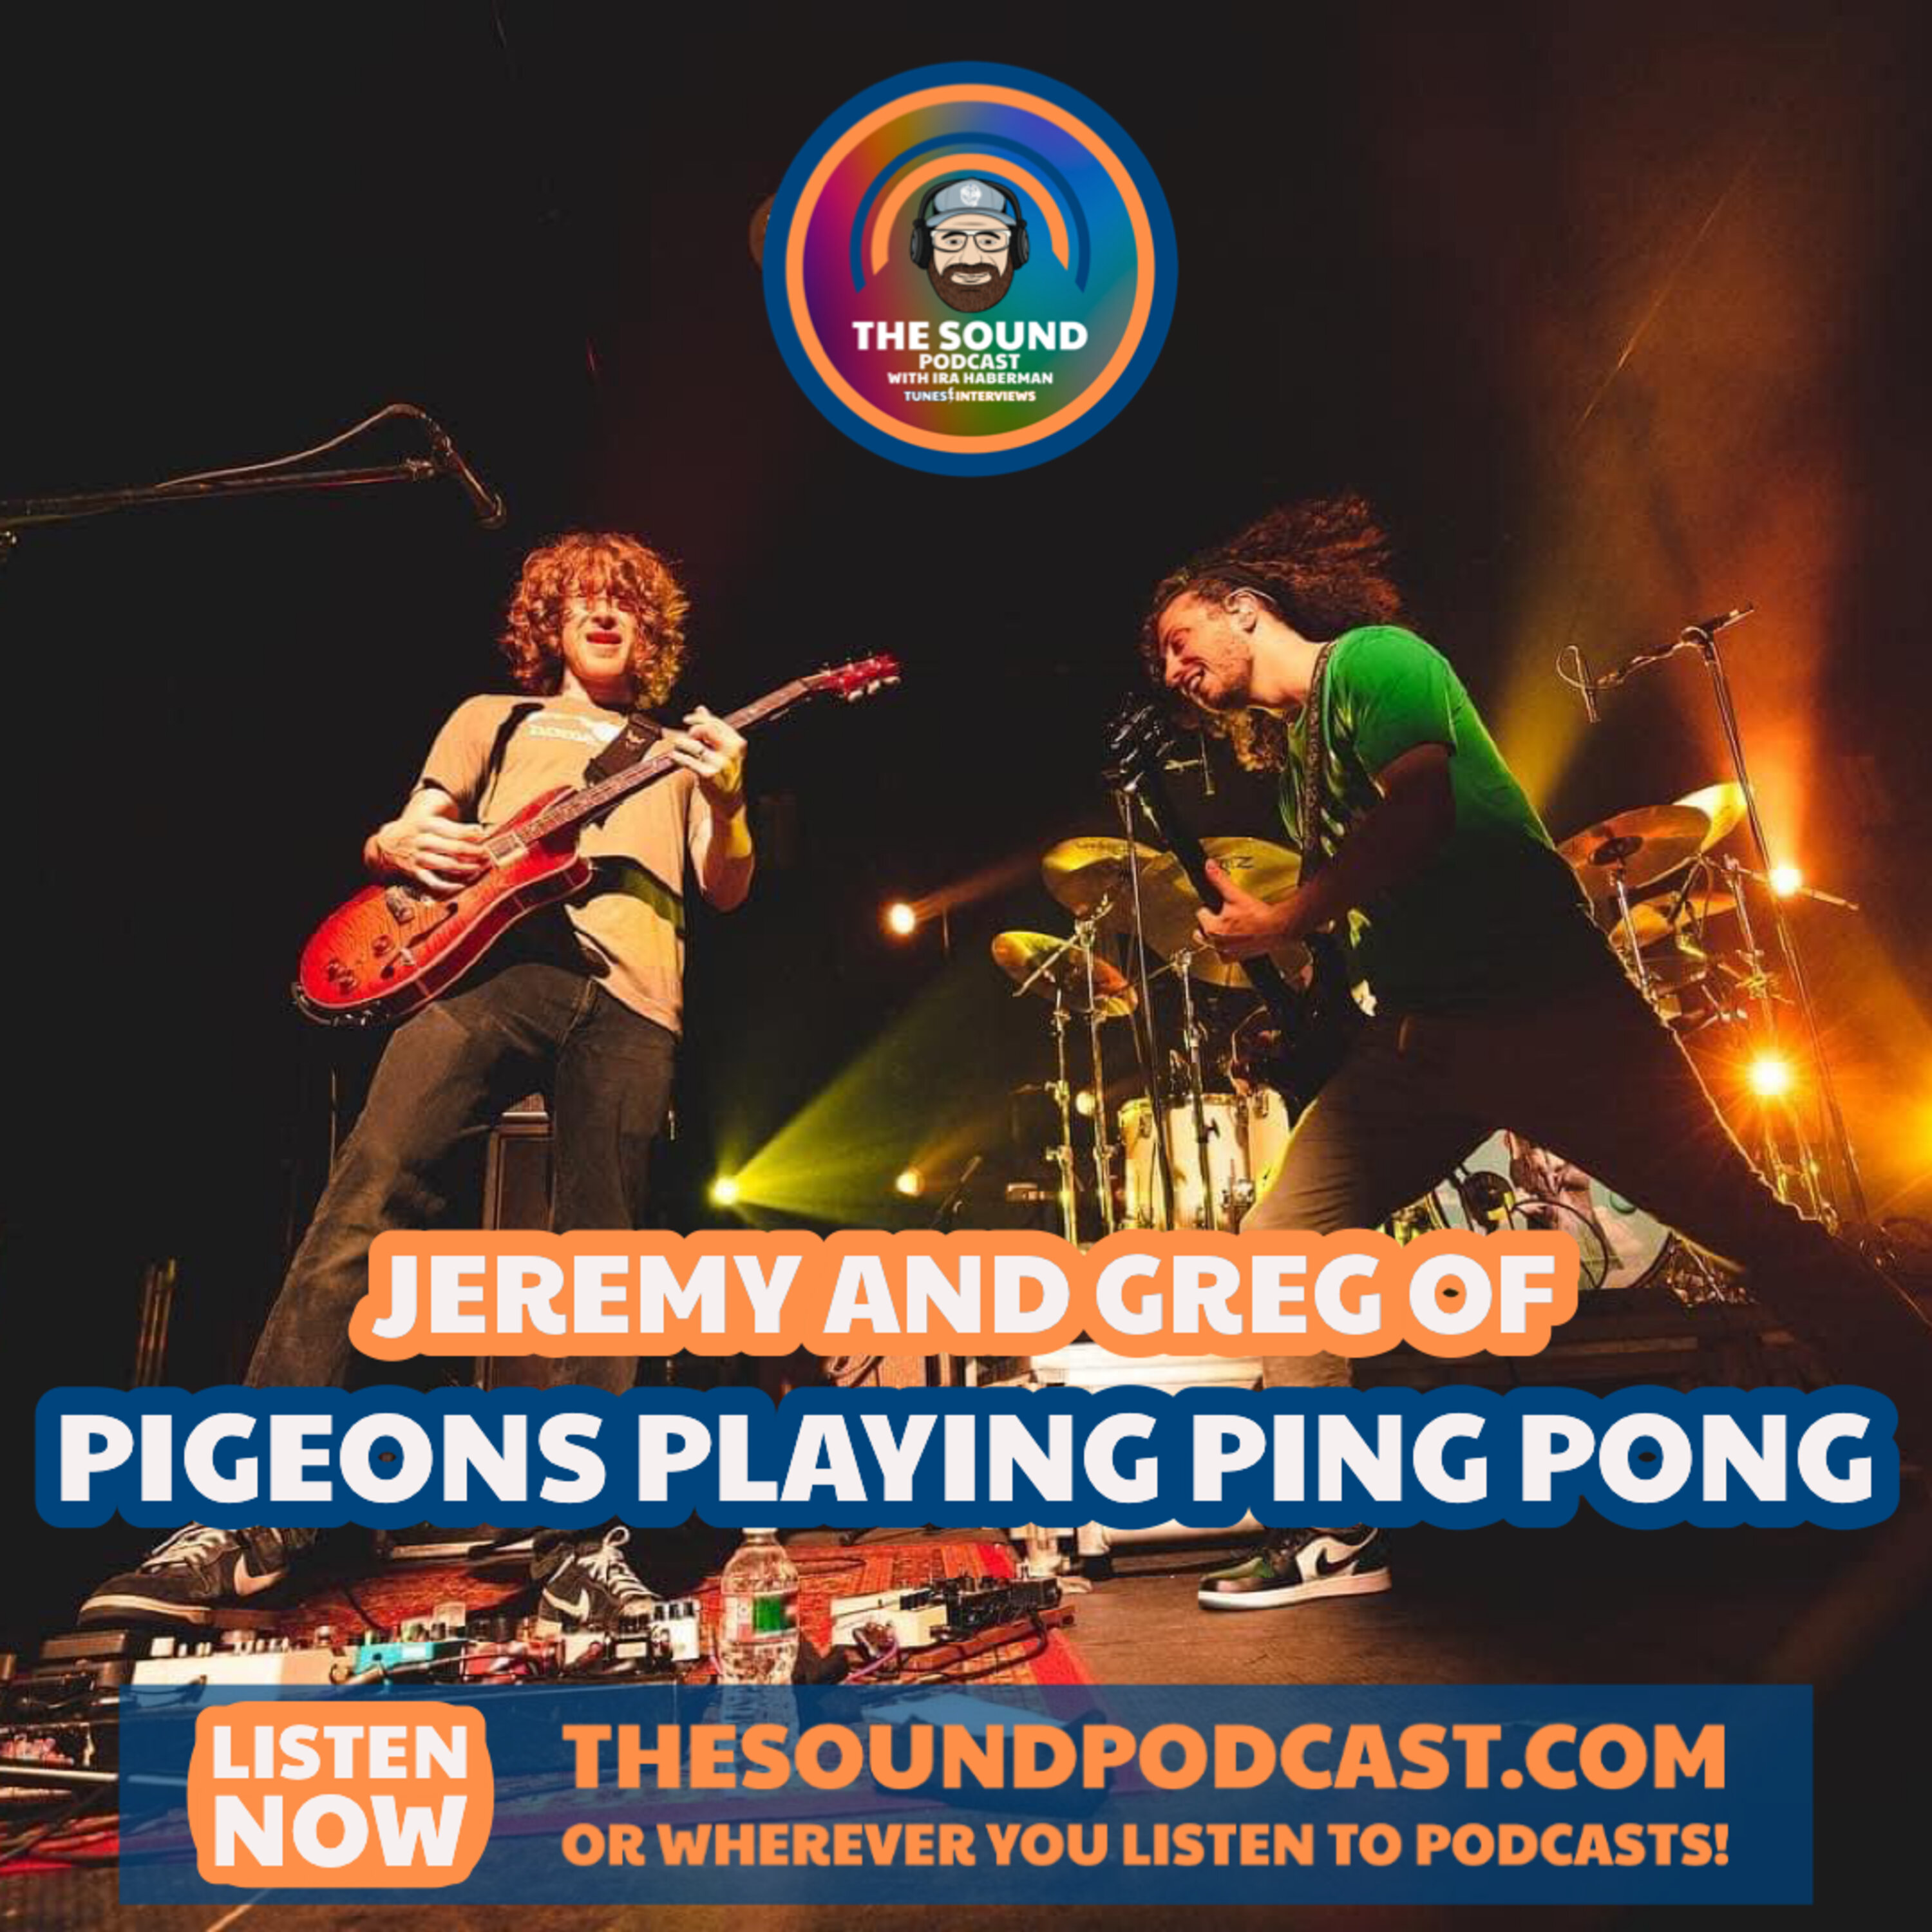 Jeremy & Greg of Pigeons Playing Ping Pong Image